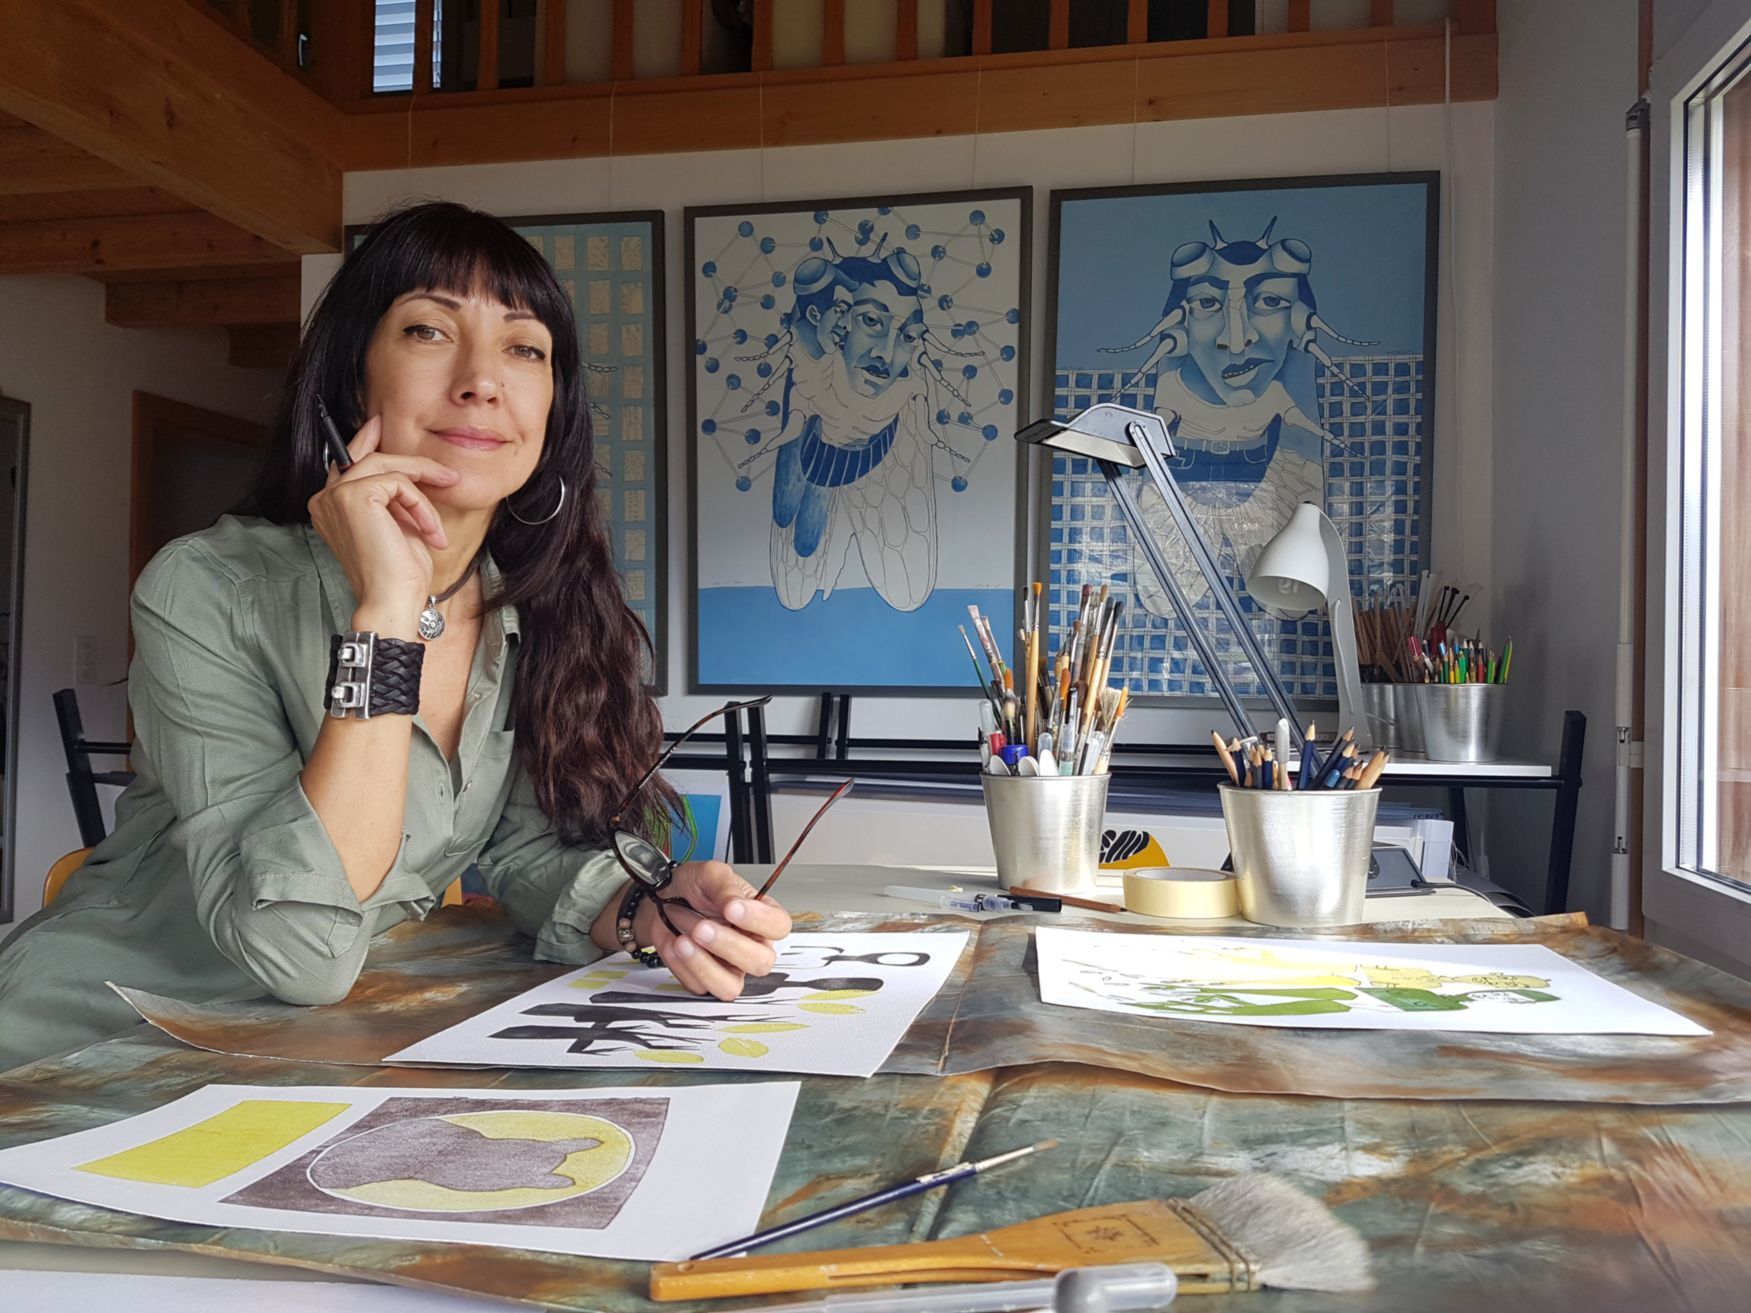 Ana Keim dans son atelier à Branson.